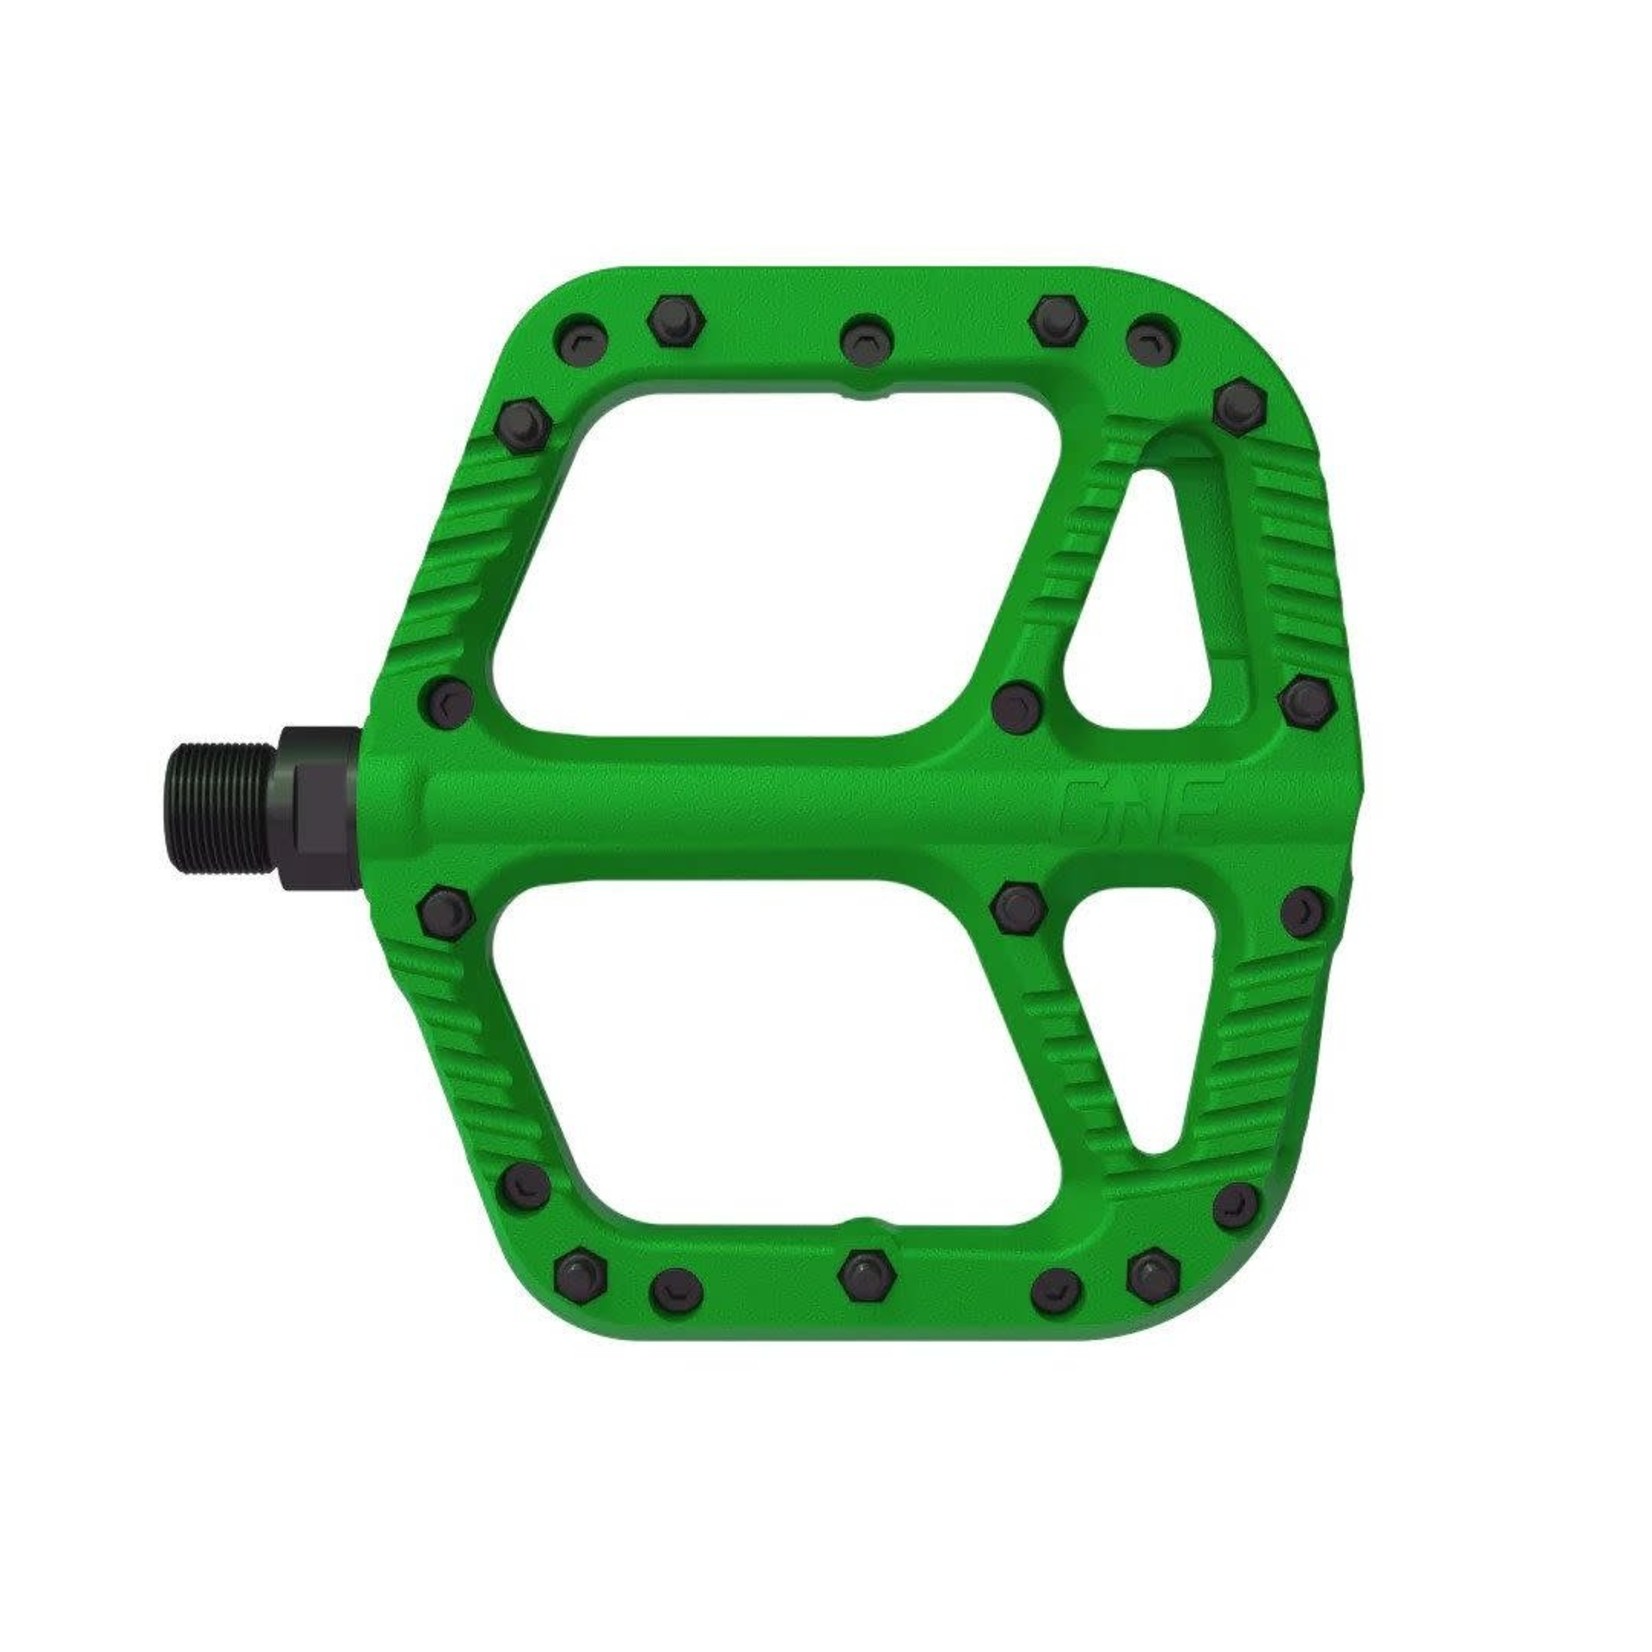 OneUp Components OneUp Components Composite Platform Pedals, Green